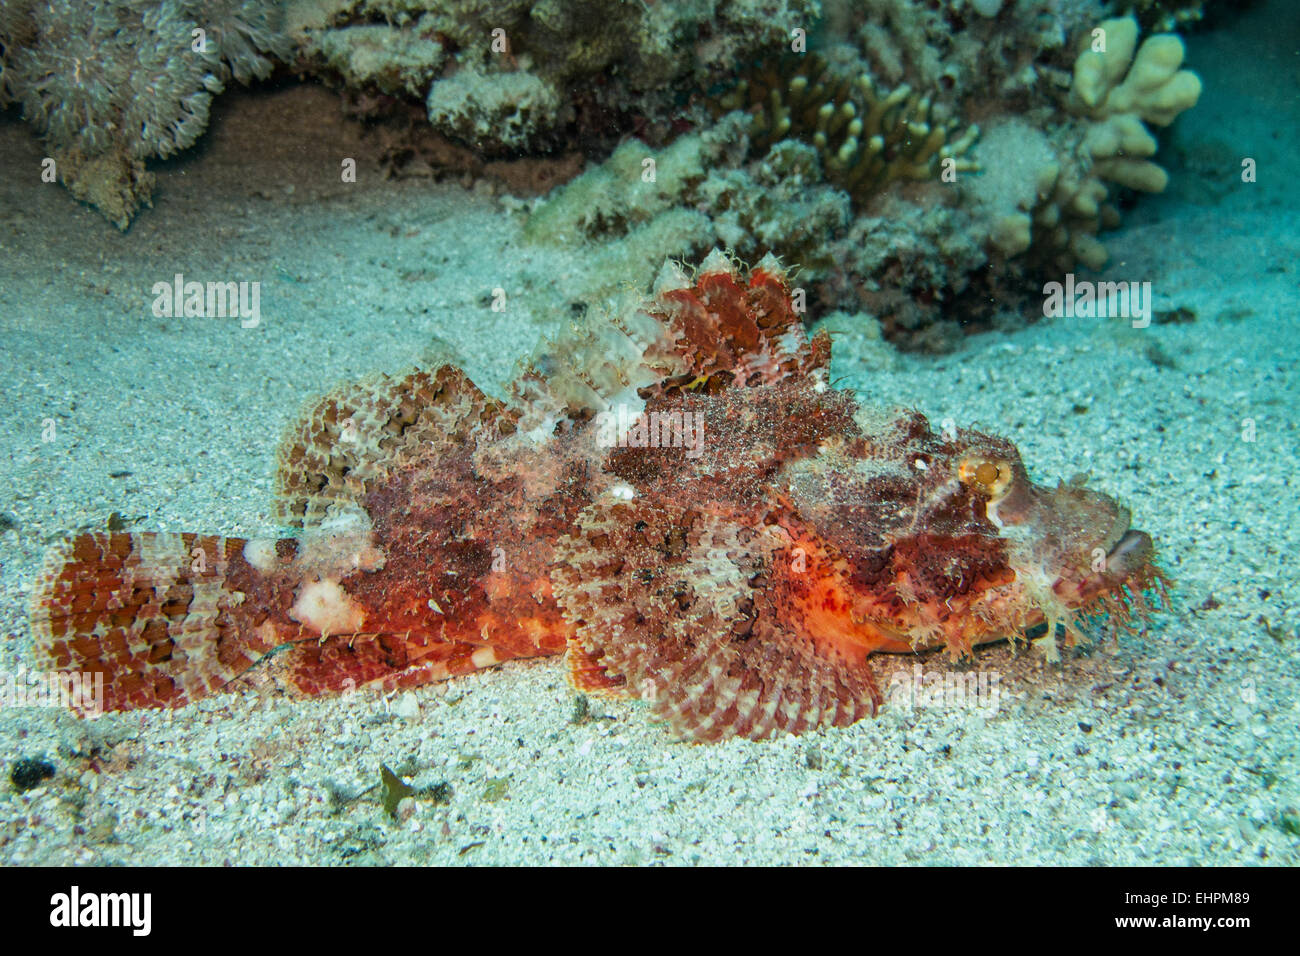 Tassled scorpionfish Stock Photo